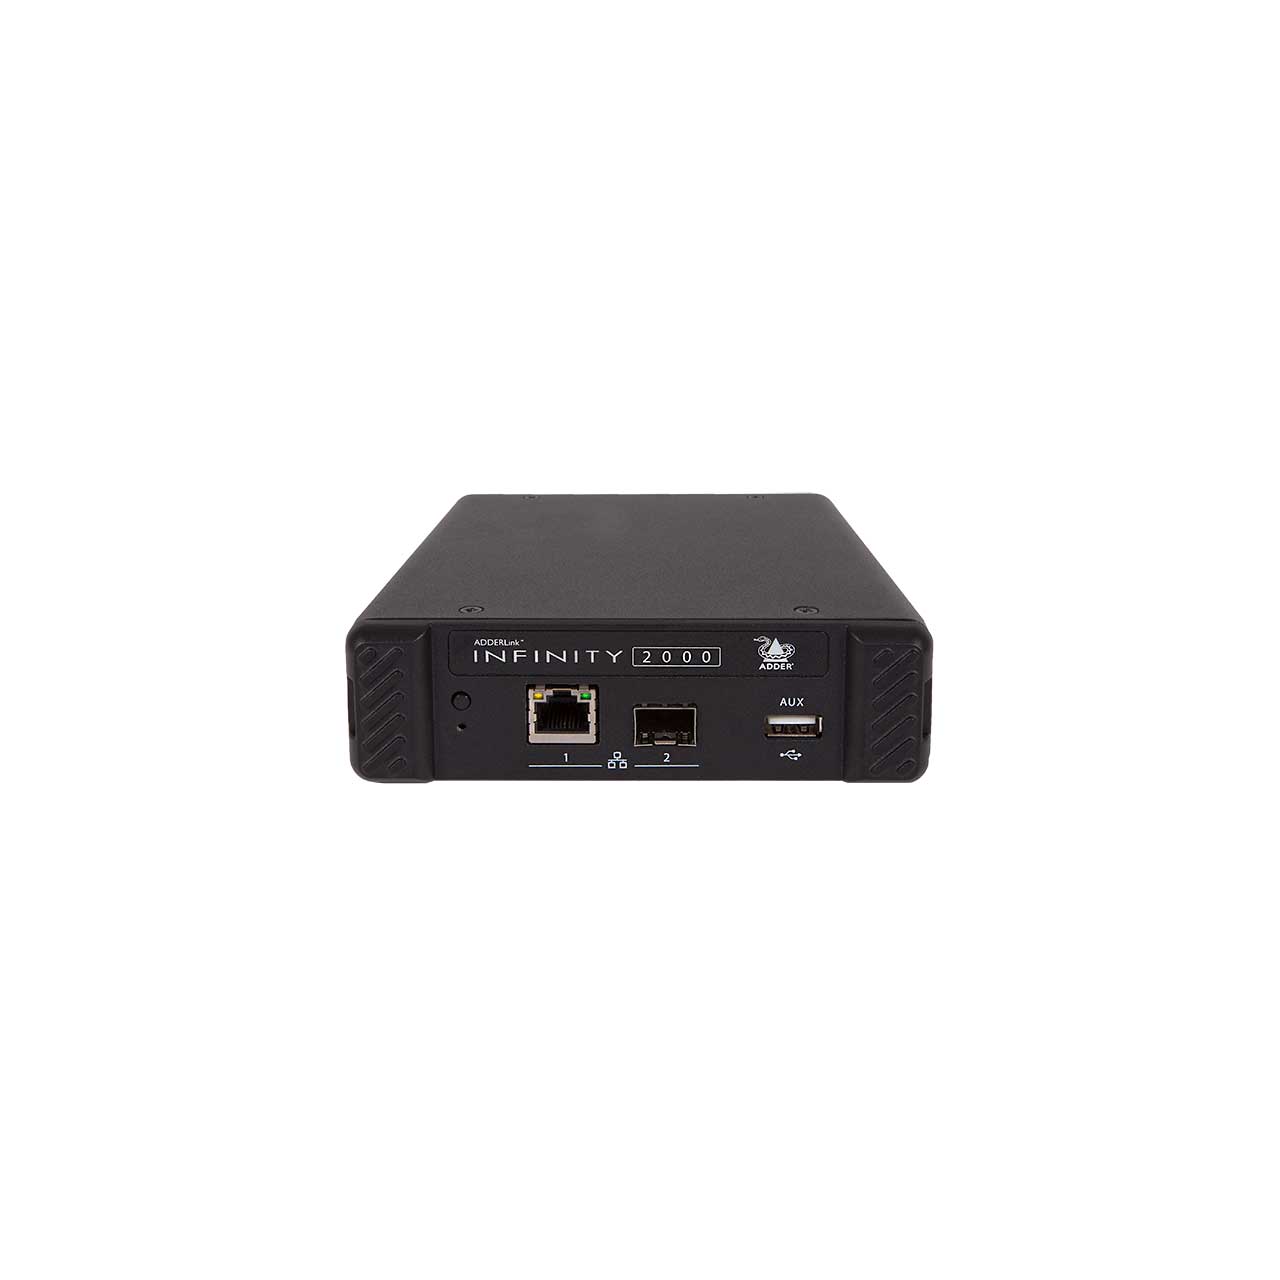 Adder ADDERLink INFINITY 2102 Dual-head Digital Video/Audio & USB2.0 over 1GbE IP Network KVM Extender - Transmitter ADR-ALIF2102T-US